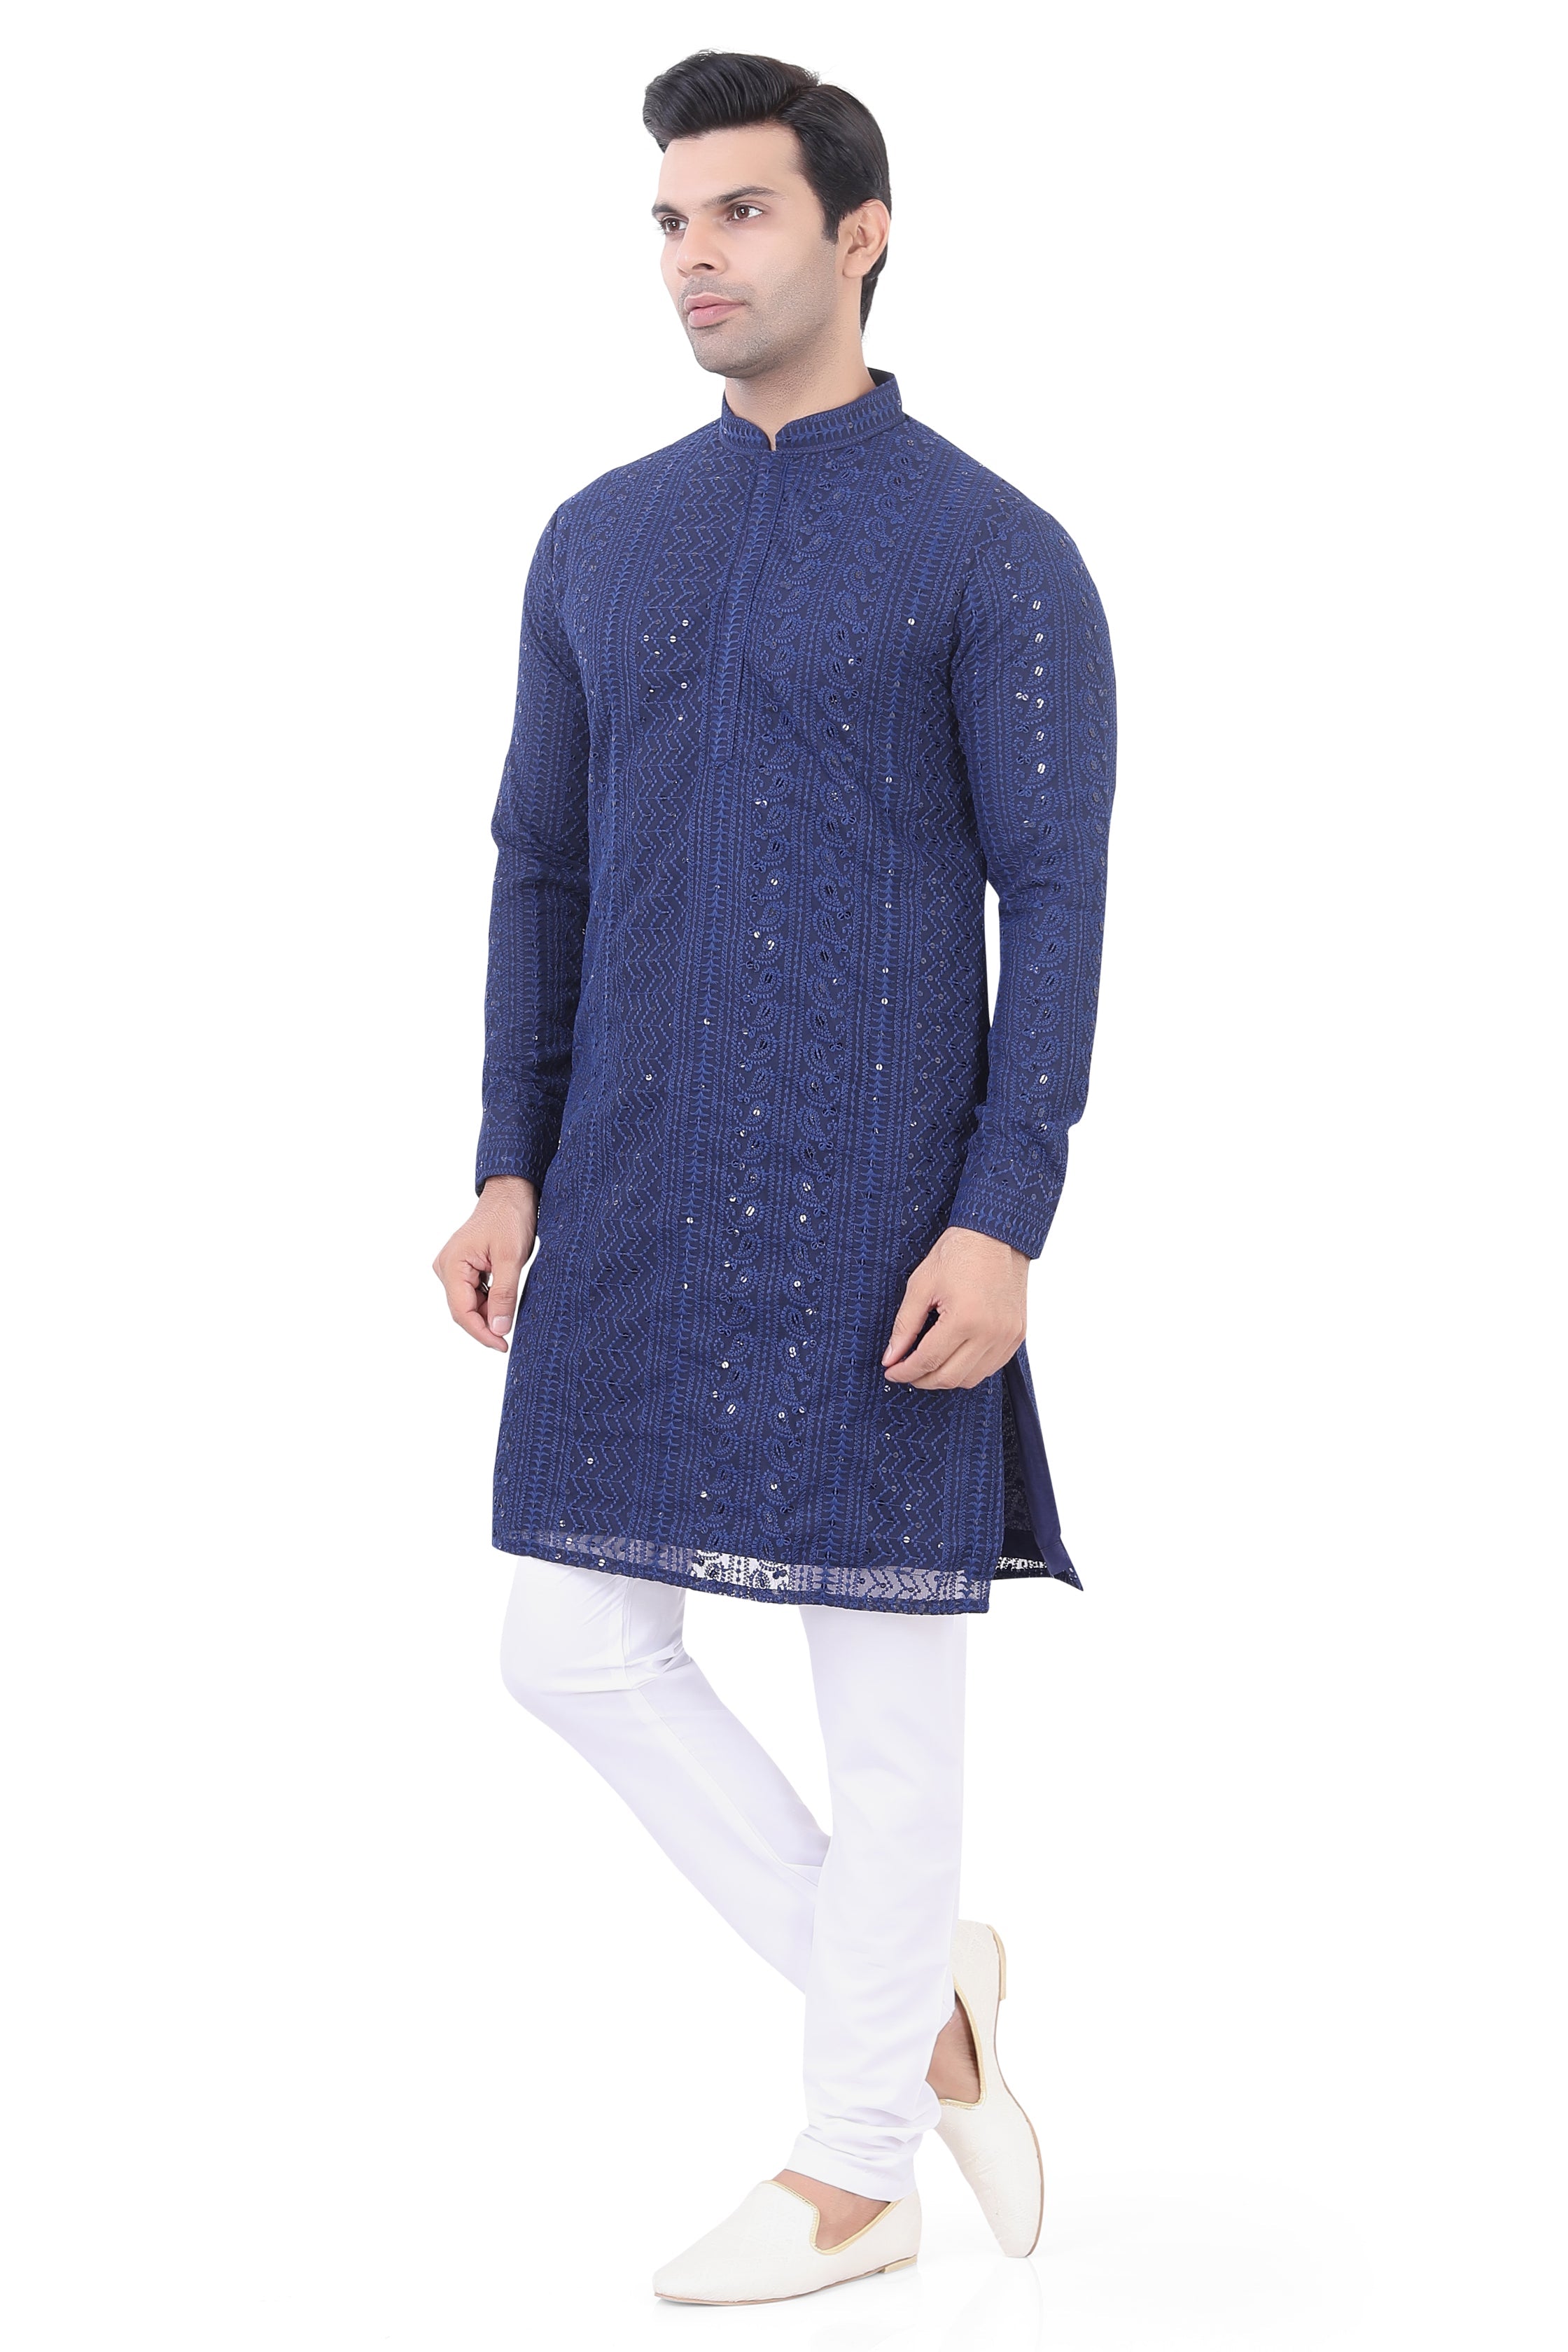 Lucknowi Kurta Pajama Set in Navy Blue  - LCKP-009